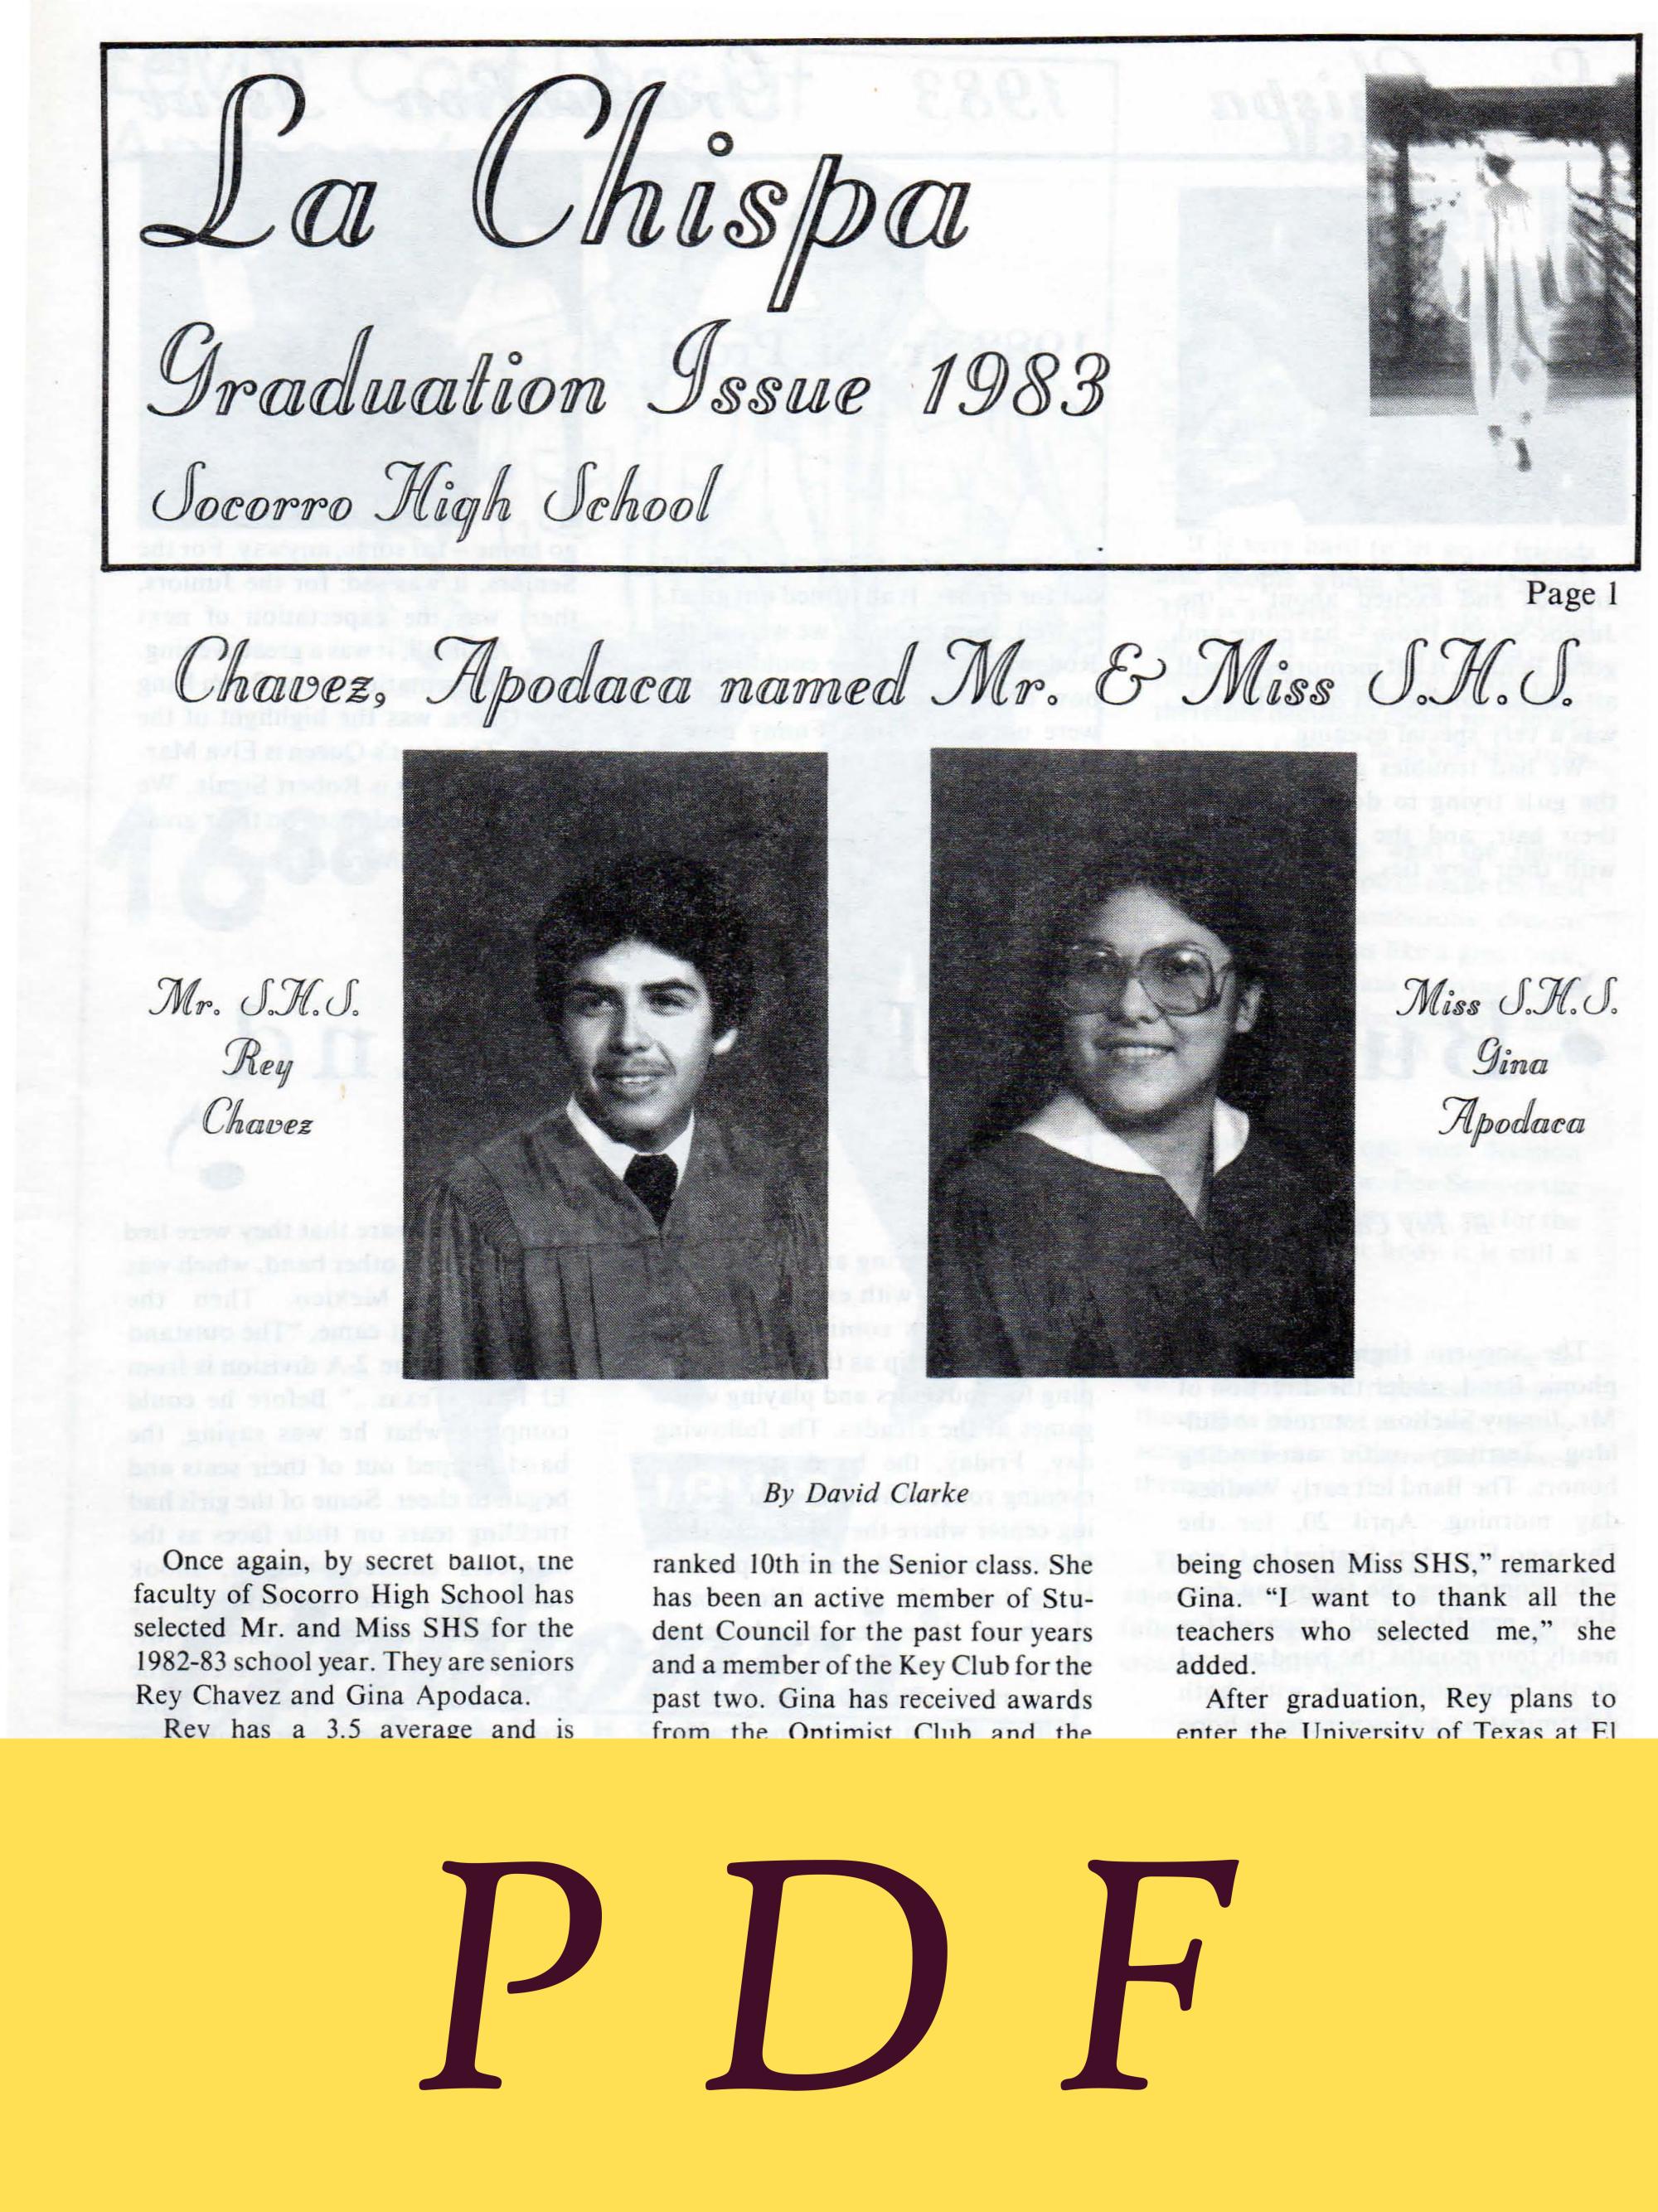 Socorro High School Texas (1979-1983) - La Chispa Socorro High School Graduation Issue